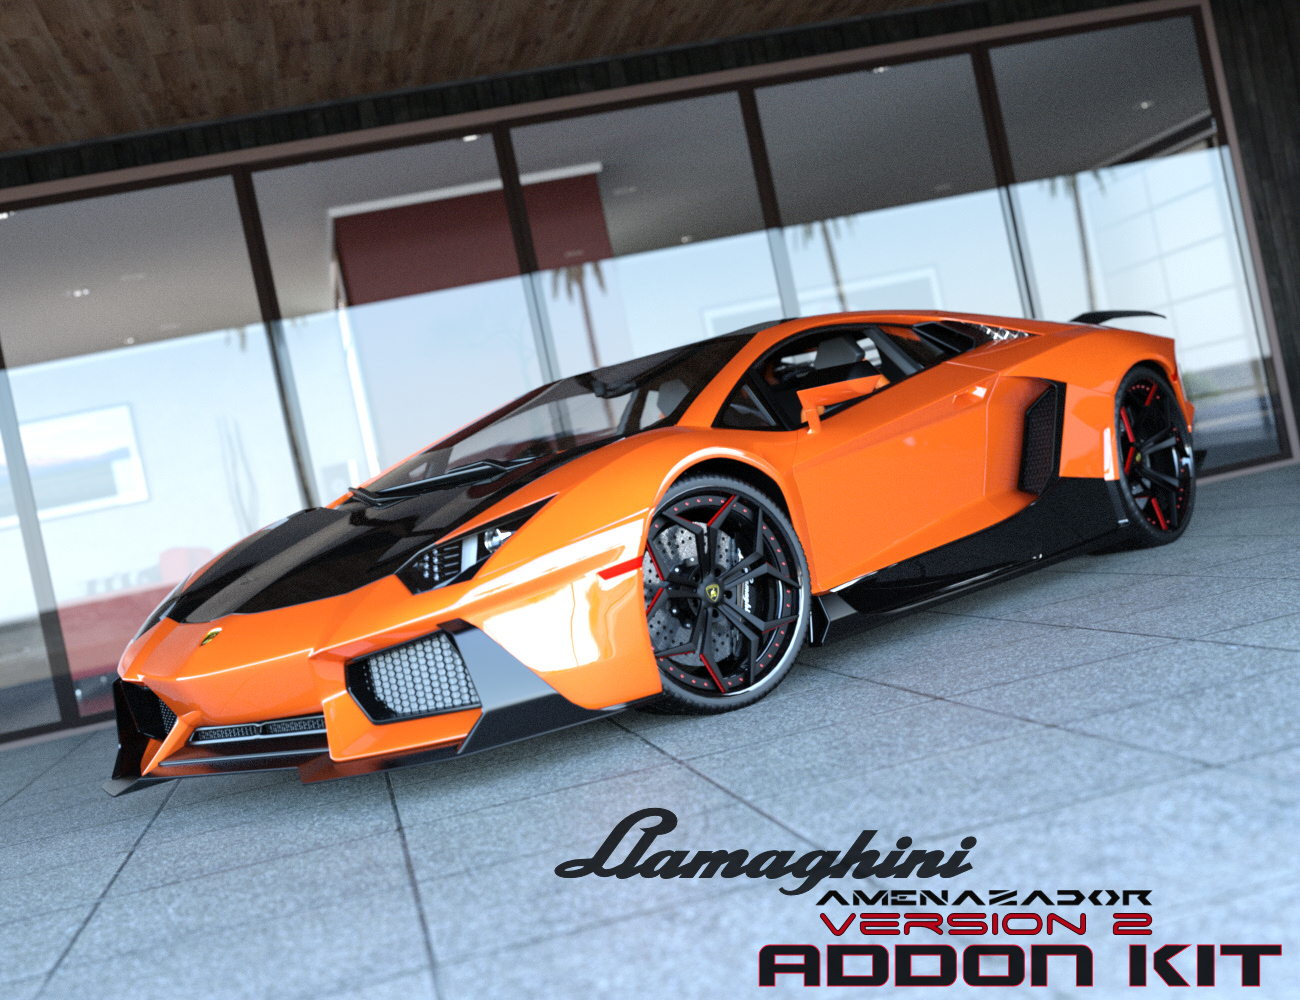 Llamaghini Amenazador Version 2 Addon Kit by: Mattymanx, 3D Models by Daz 3D